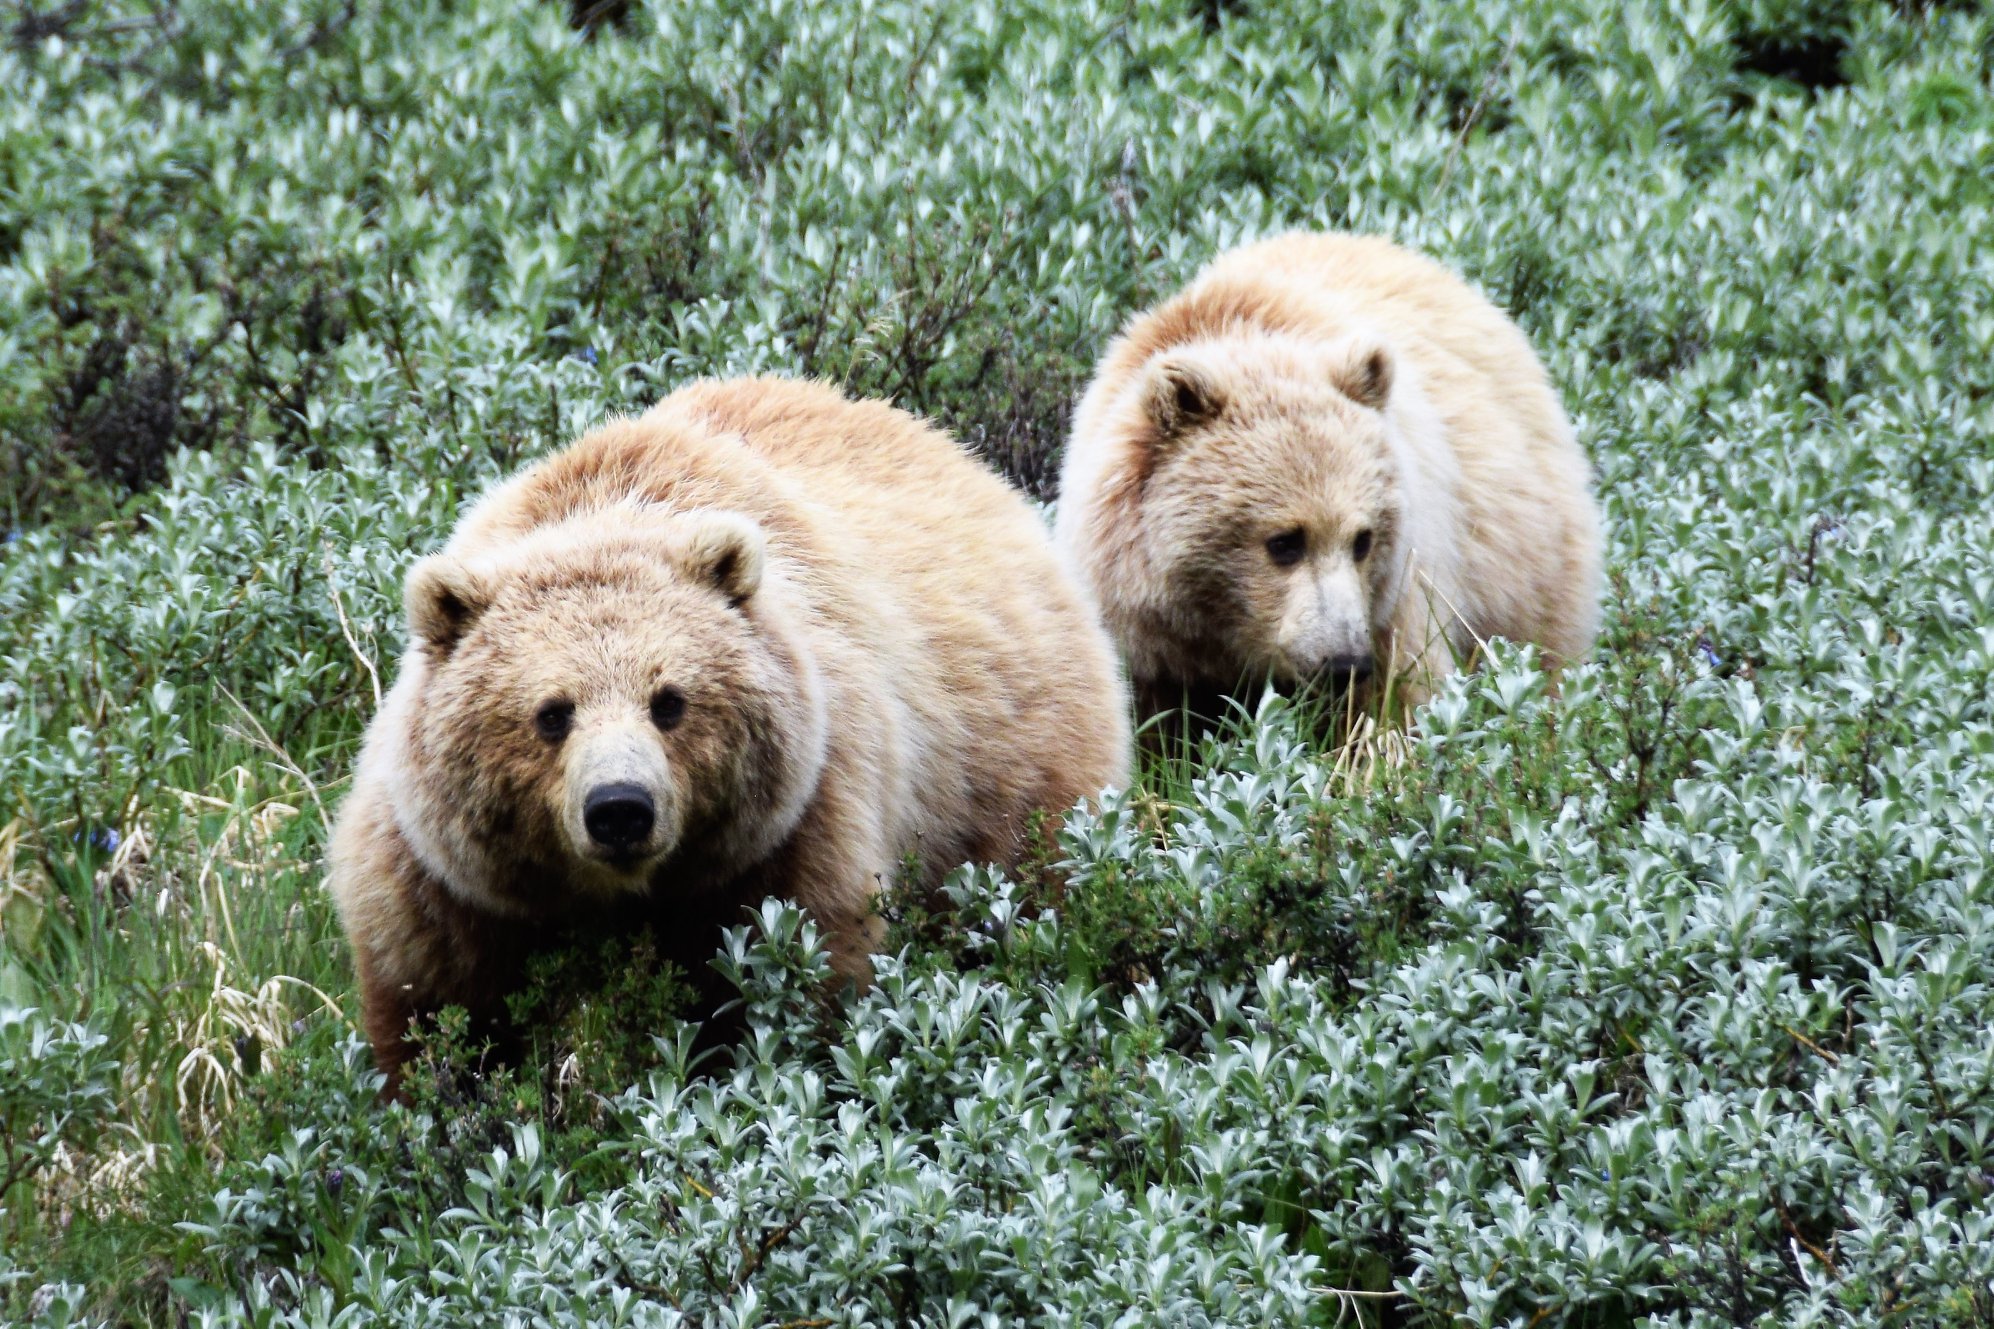 Alaska Rondreis en Cruise 2021 - Denali - Grizzly beren 2